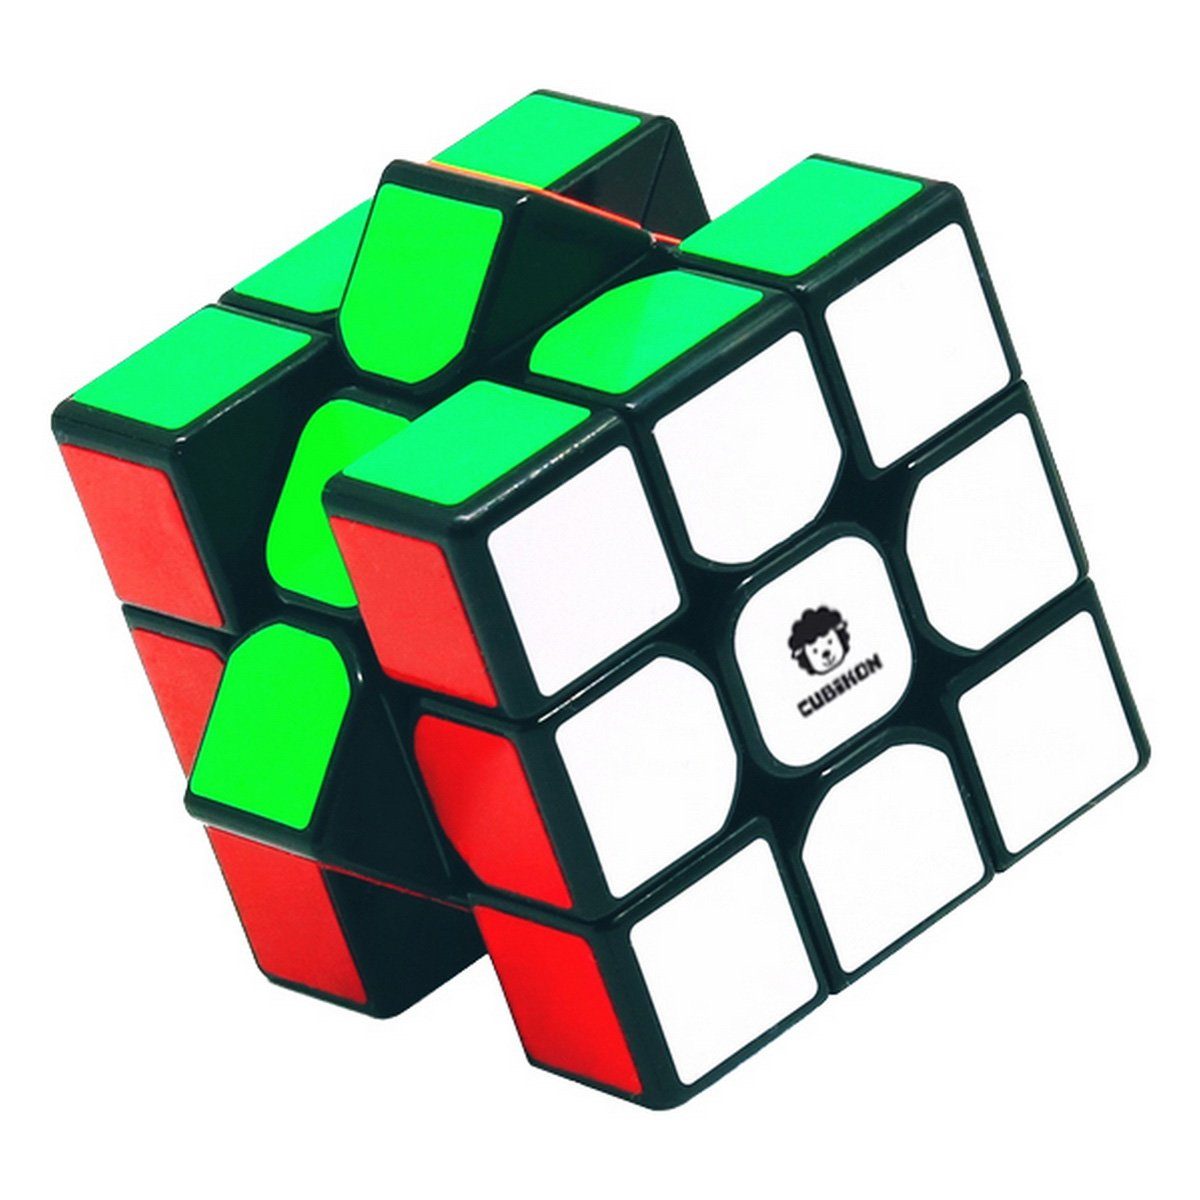 3 Cube Zauber CUBIKON Puzzleteile Speed VRS, x Original 3D-Puzzle 3 Würfel